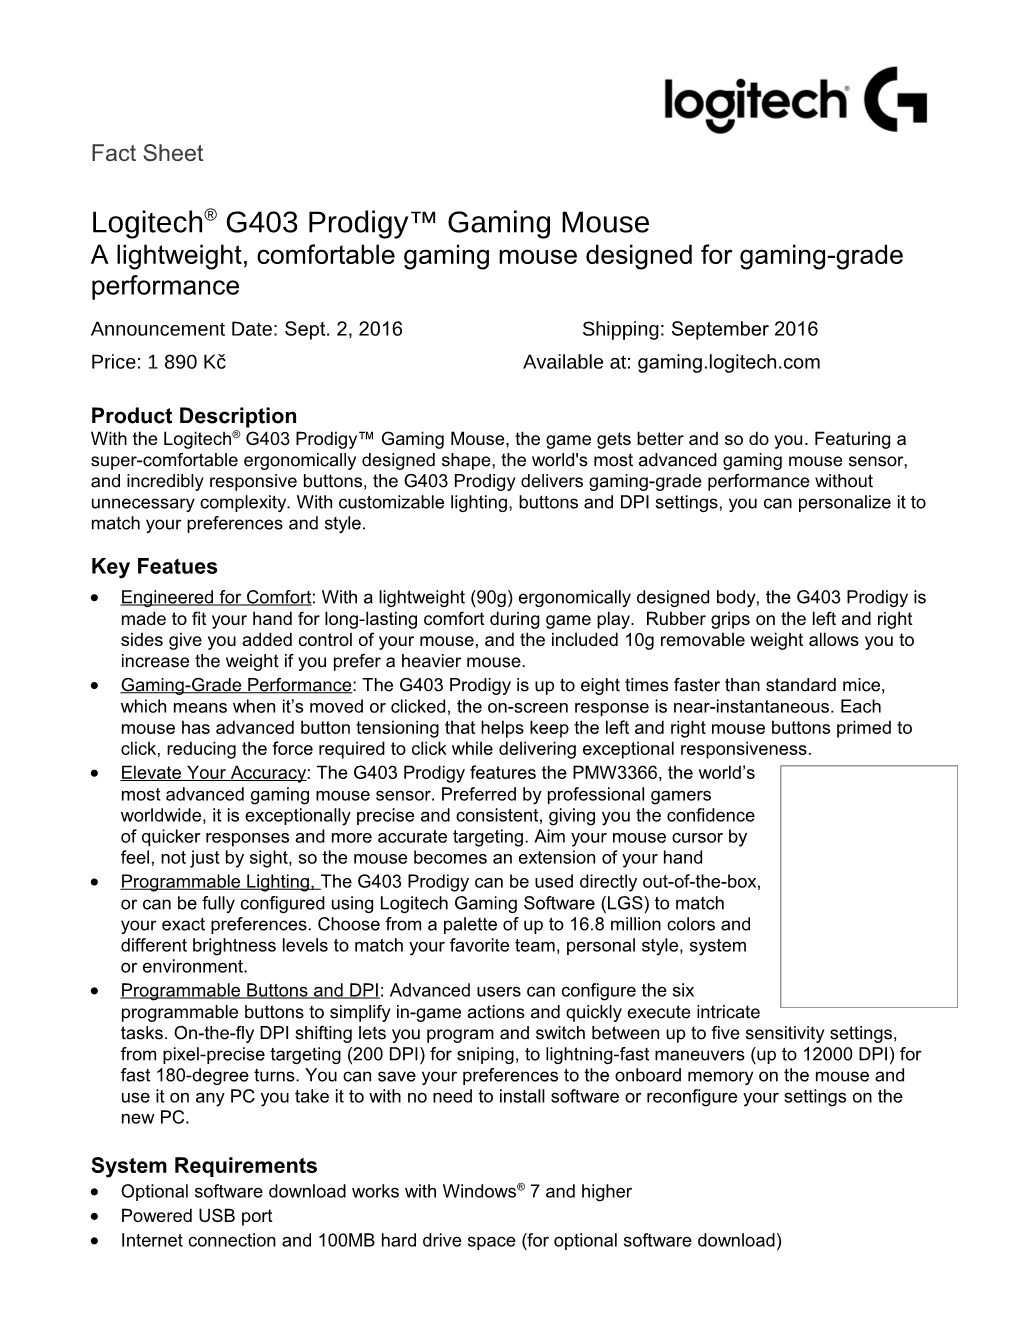 Logitech G403 Prodigy Gaming Mouse Page 2